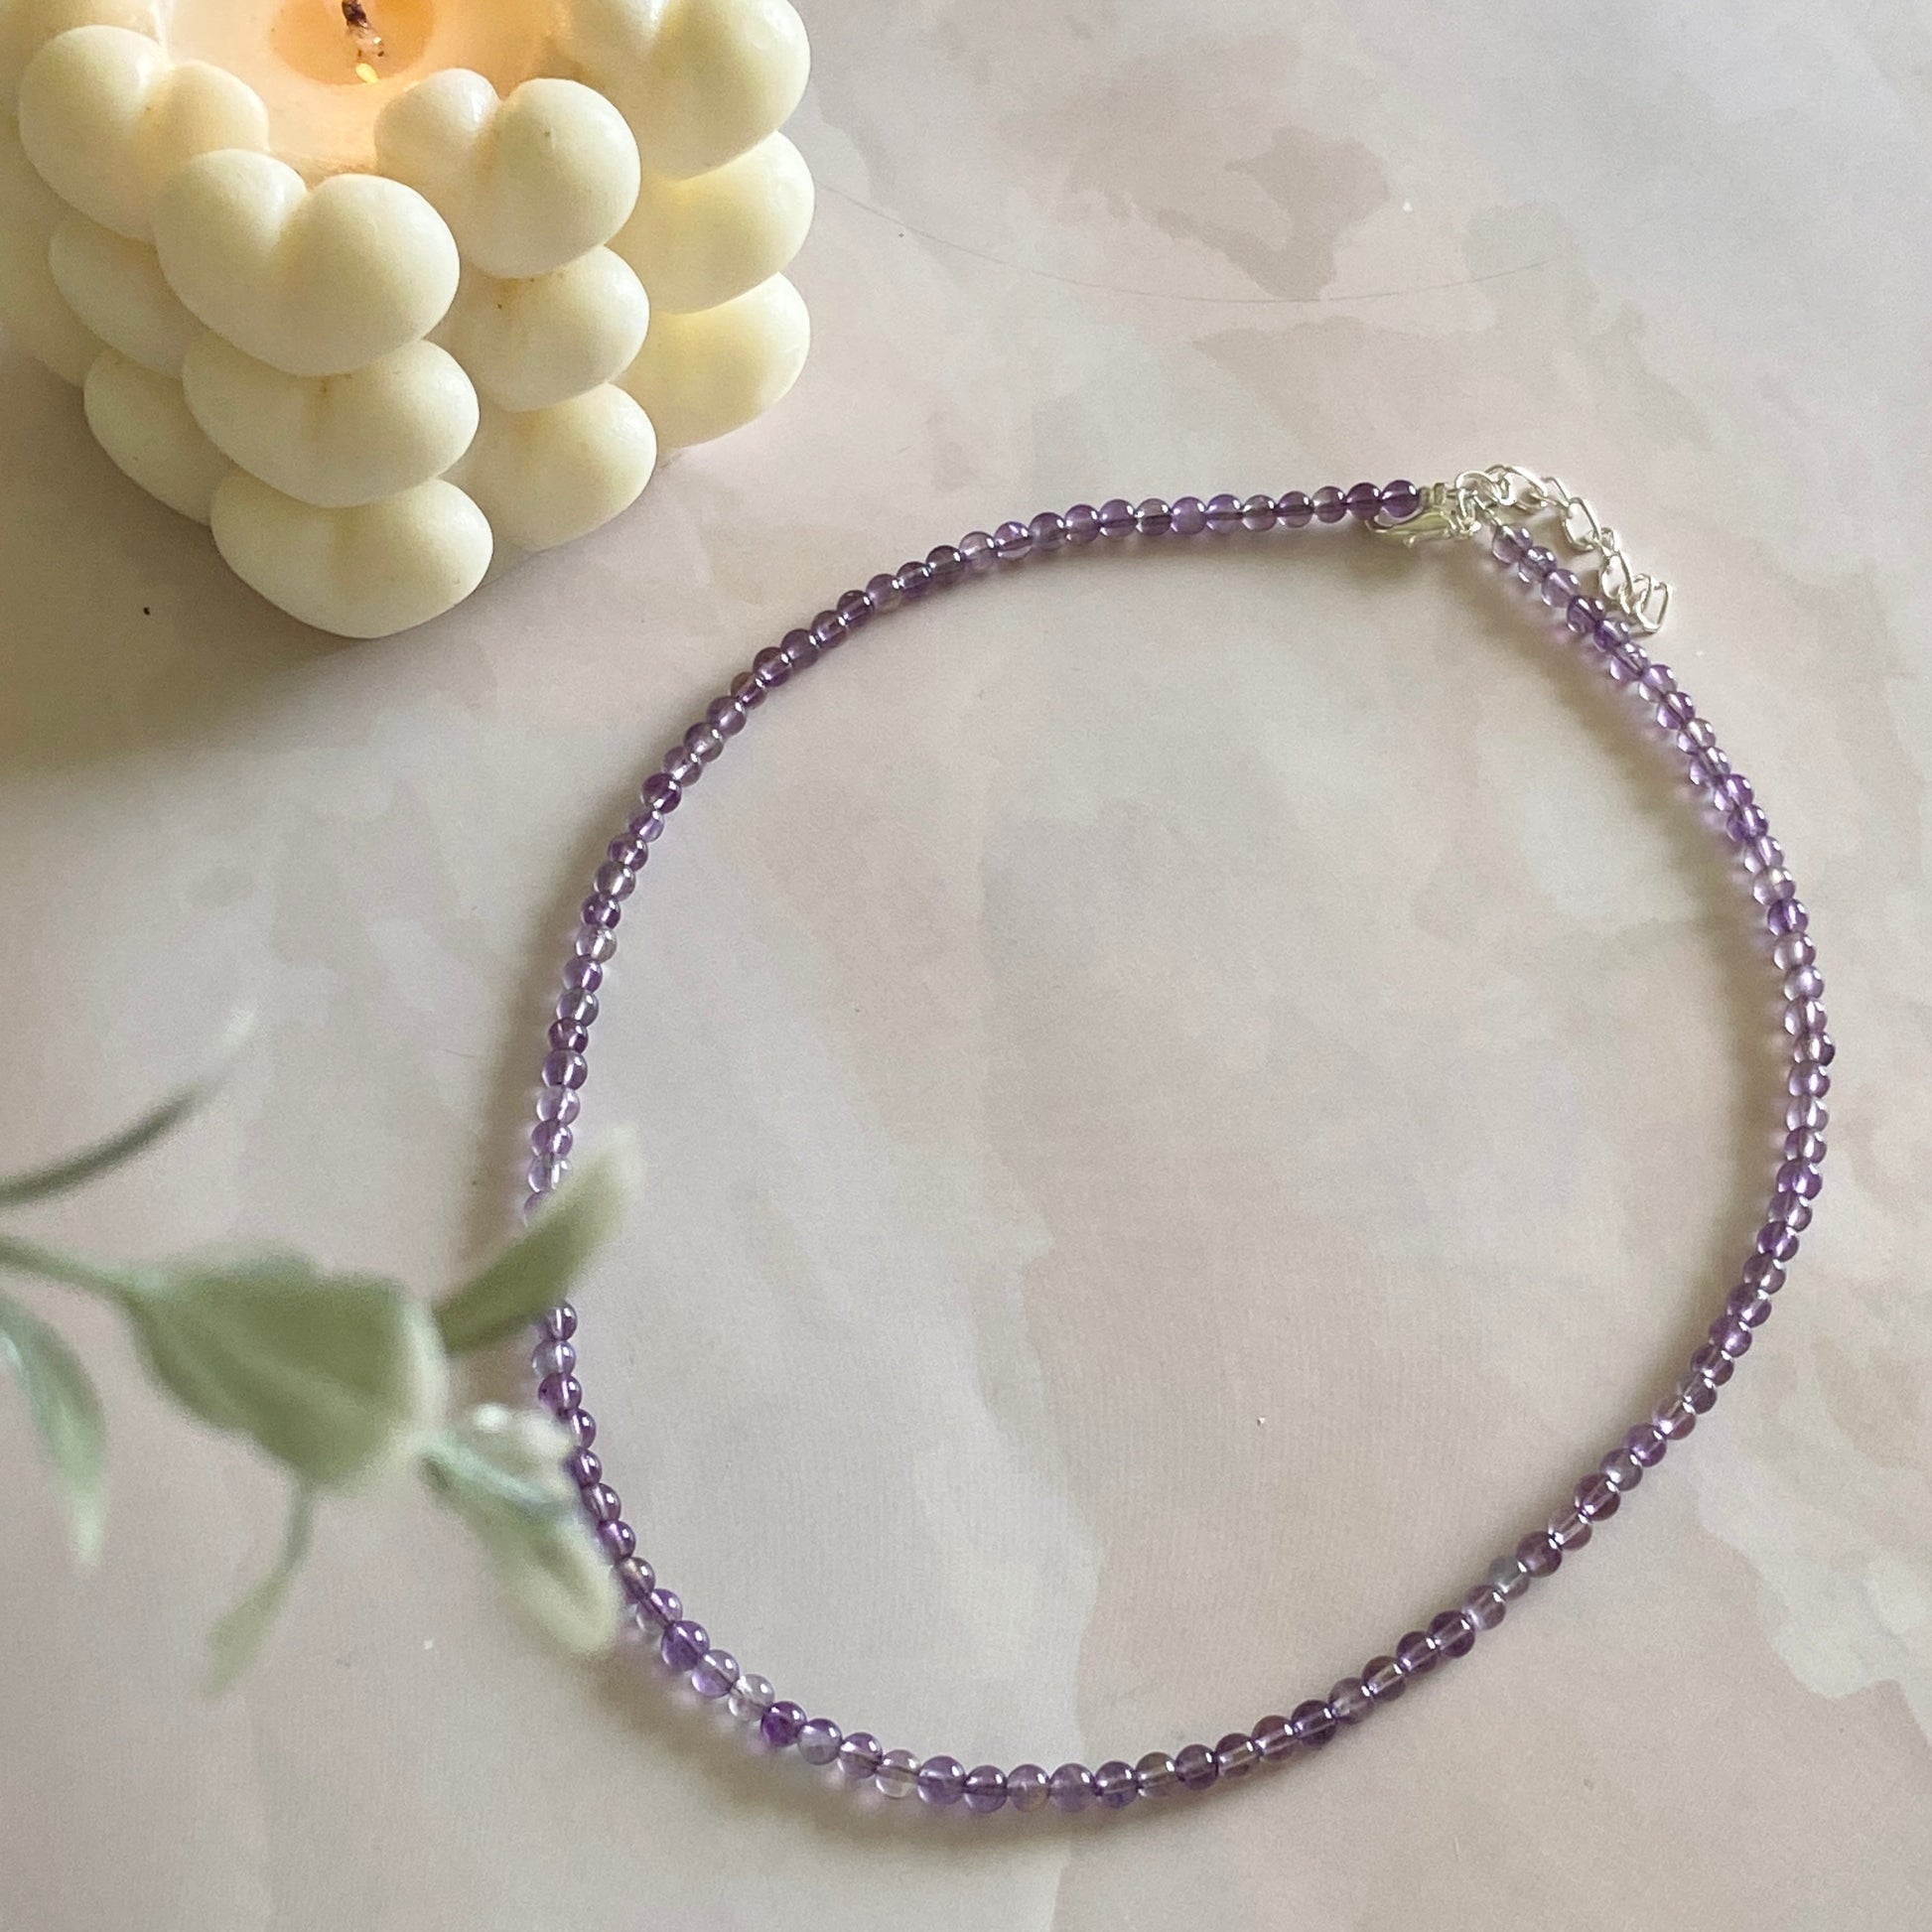 Amethyst Mini Beads Necklace | Third Eye & Crown Chakra Crystal Stones